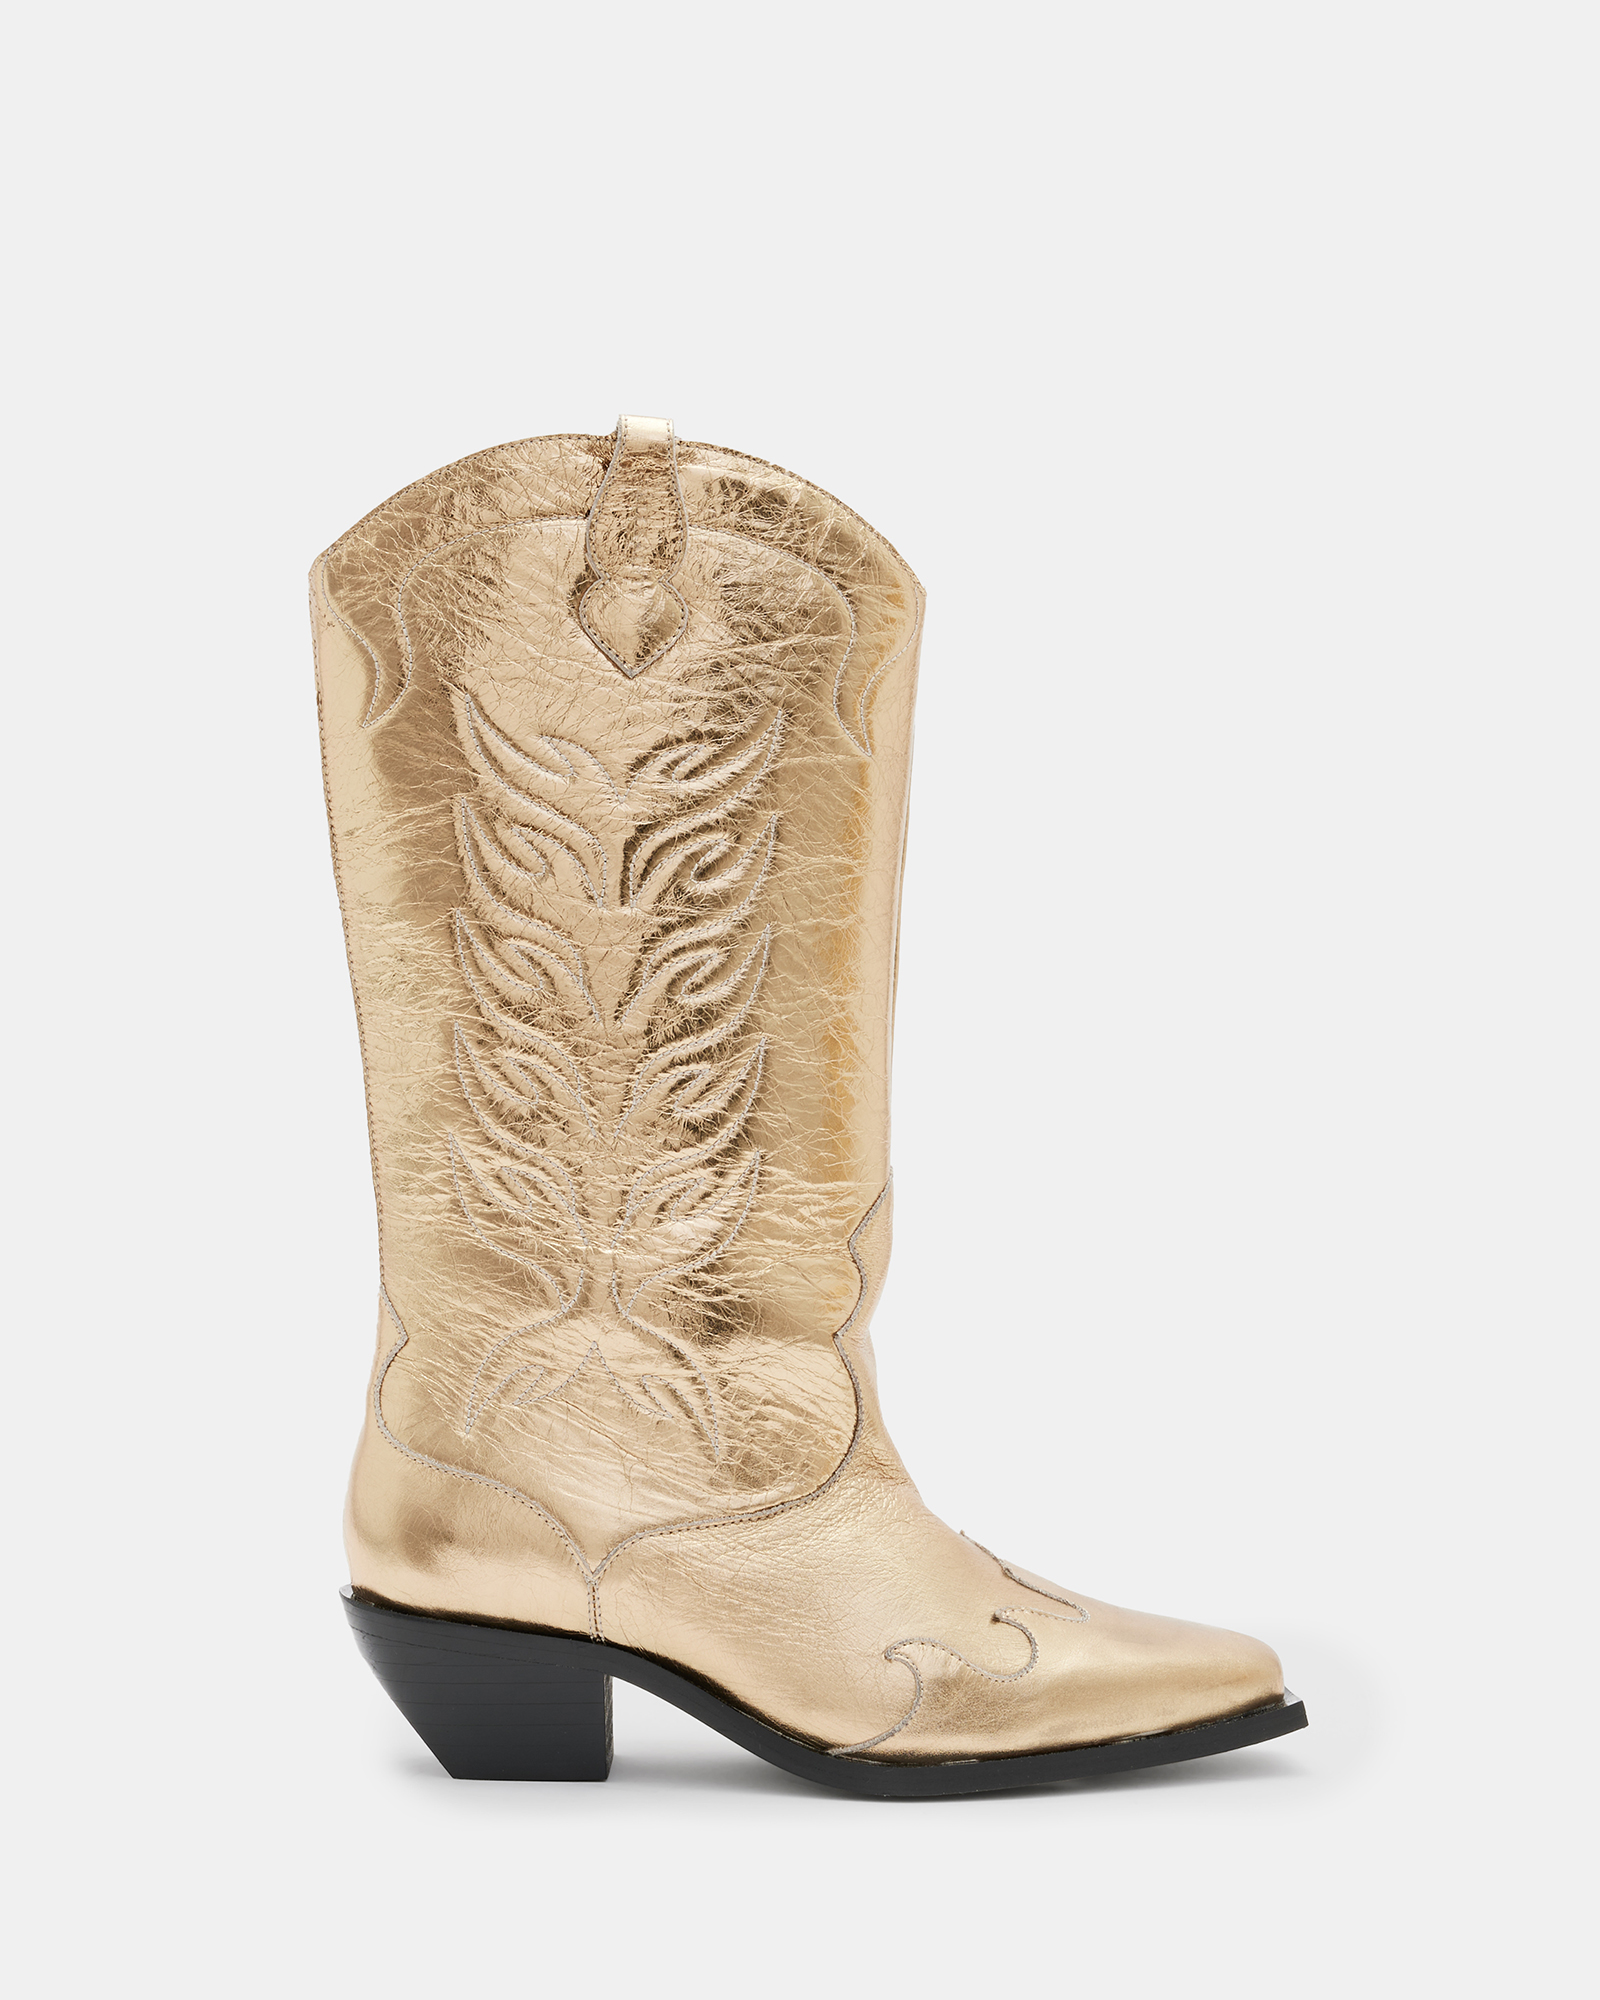 AllSaints Dolly Western Metallic Leather Boots,, METALLIC GOLD